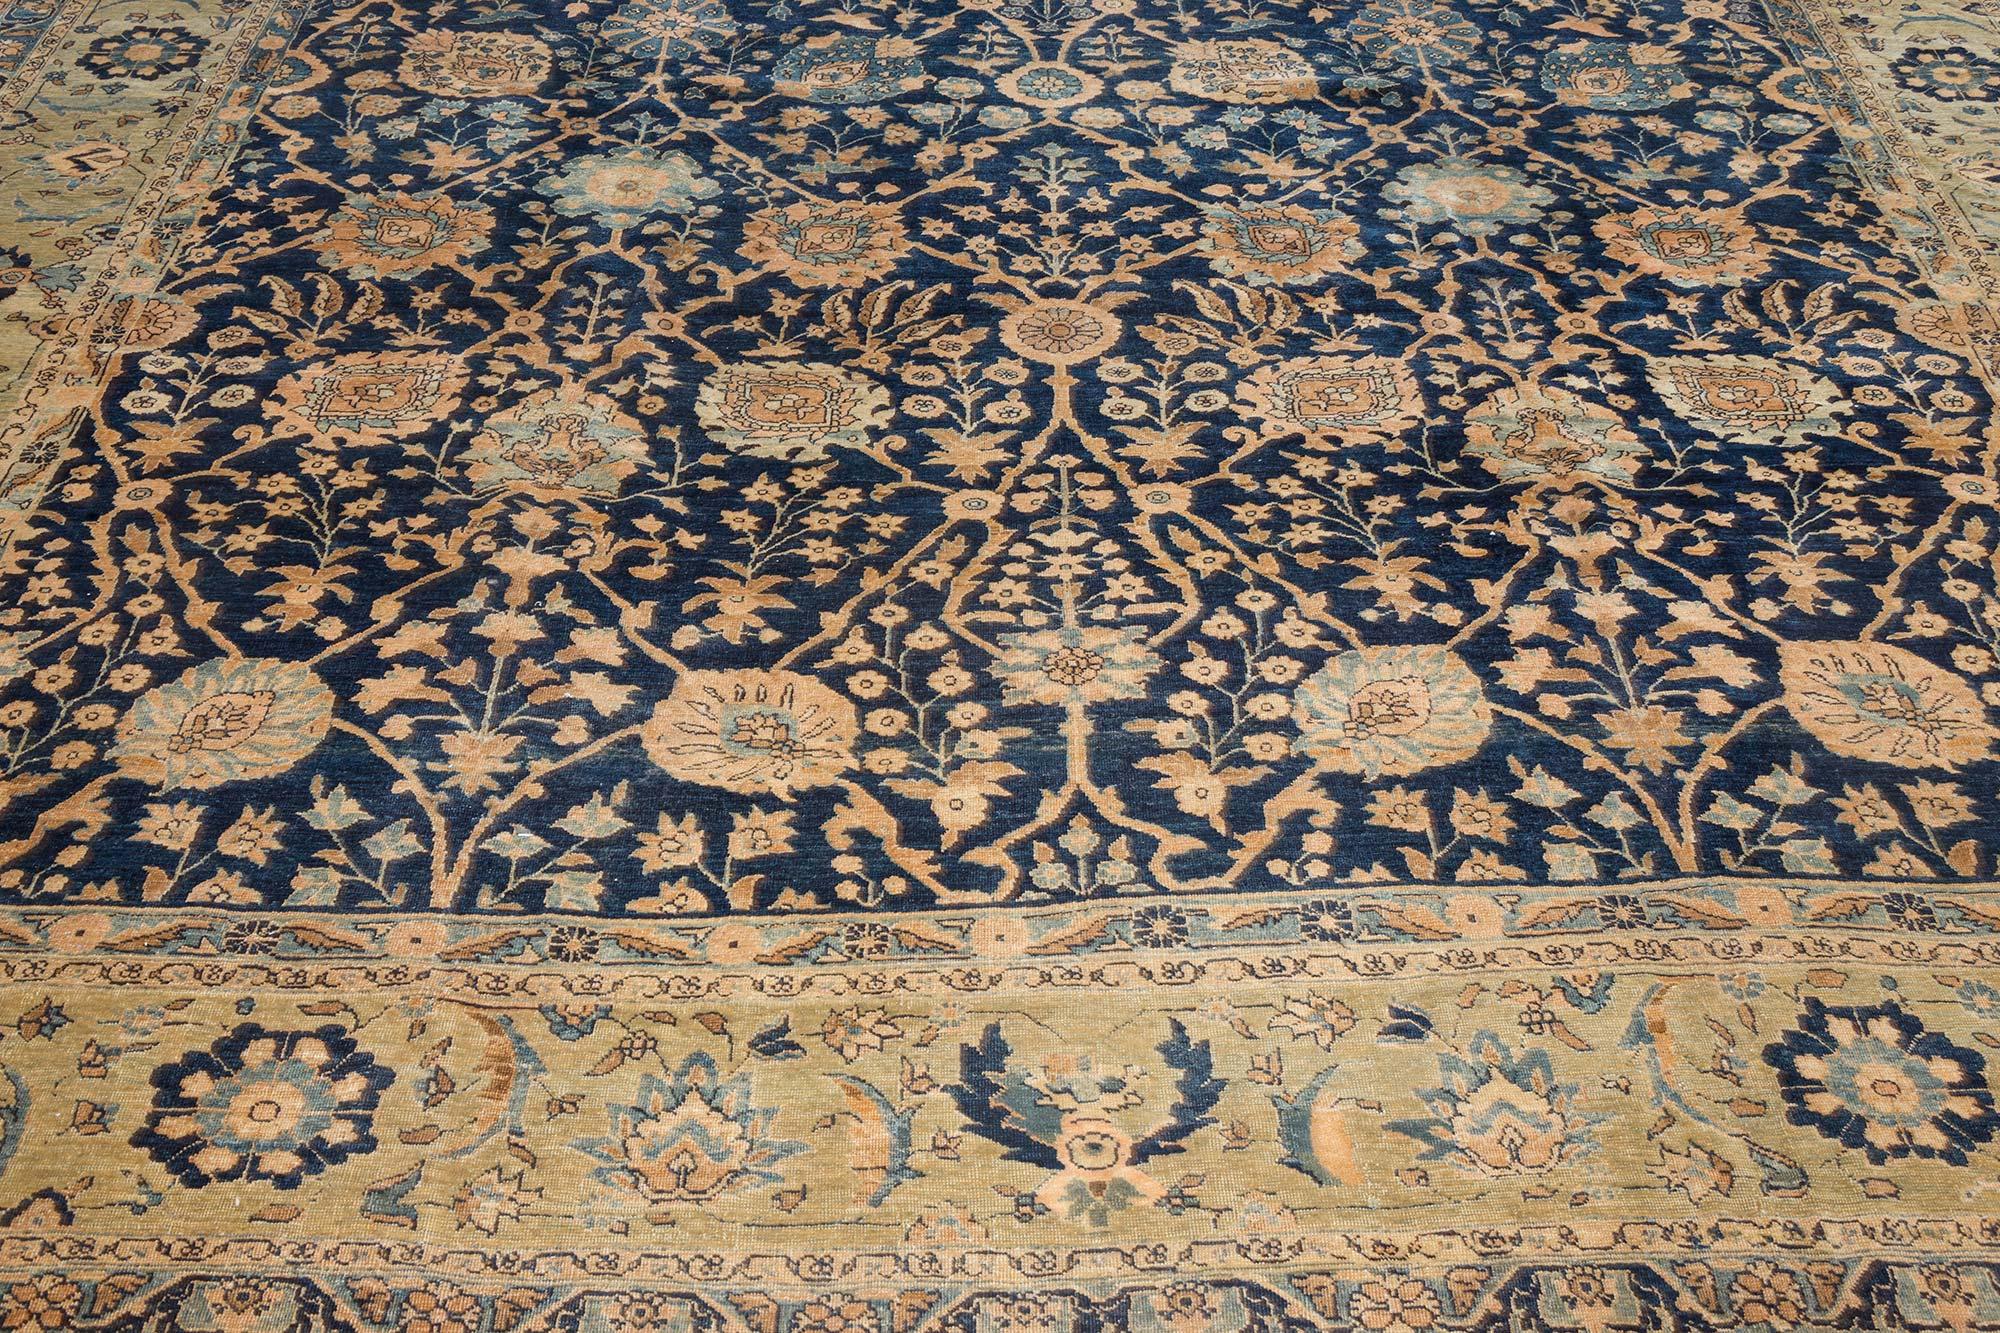 Authentic 19th century Persian Tabriz handmade wool carpet
Size: 10'8